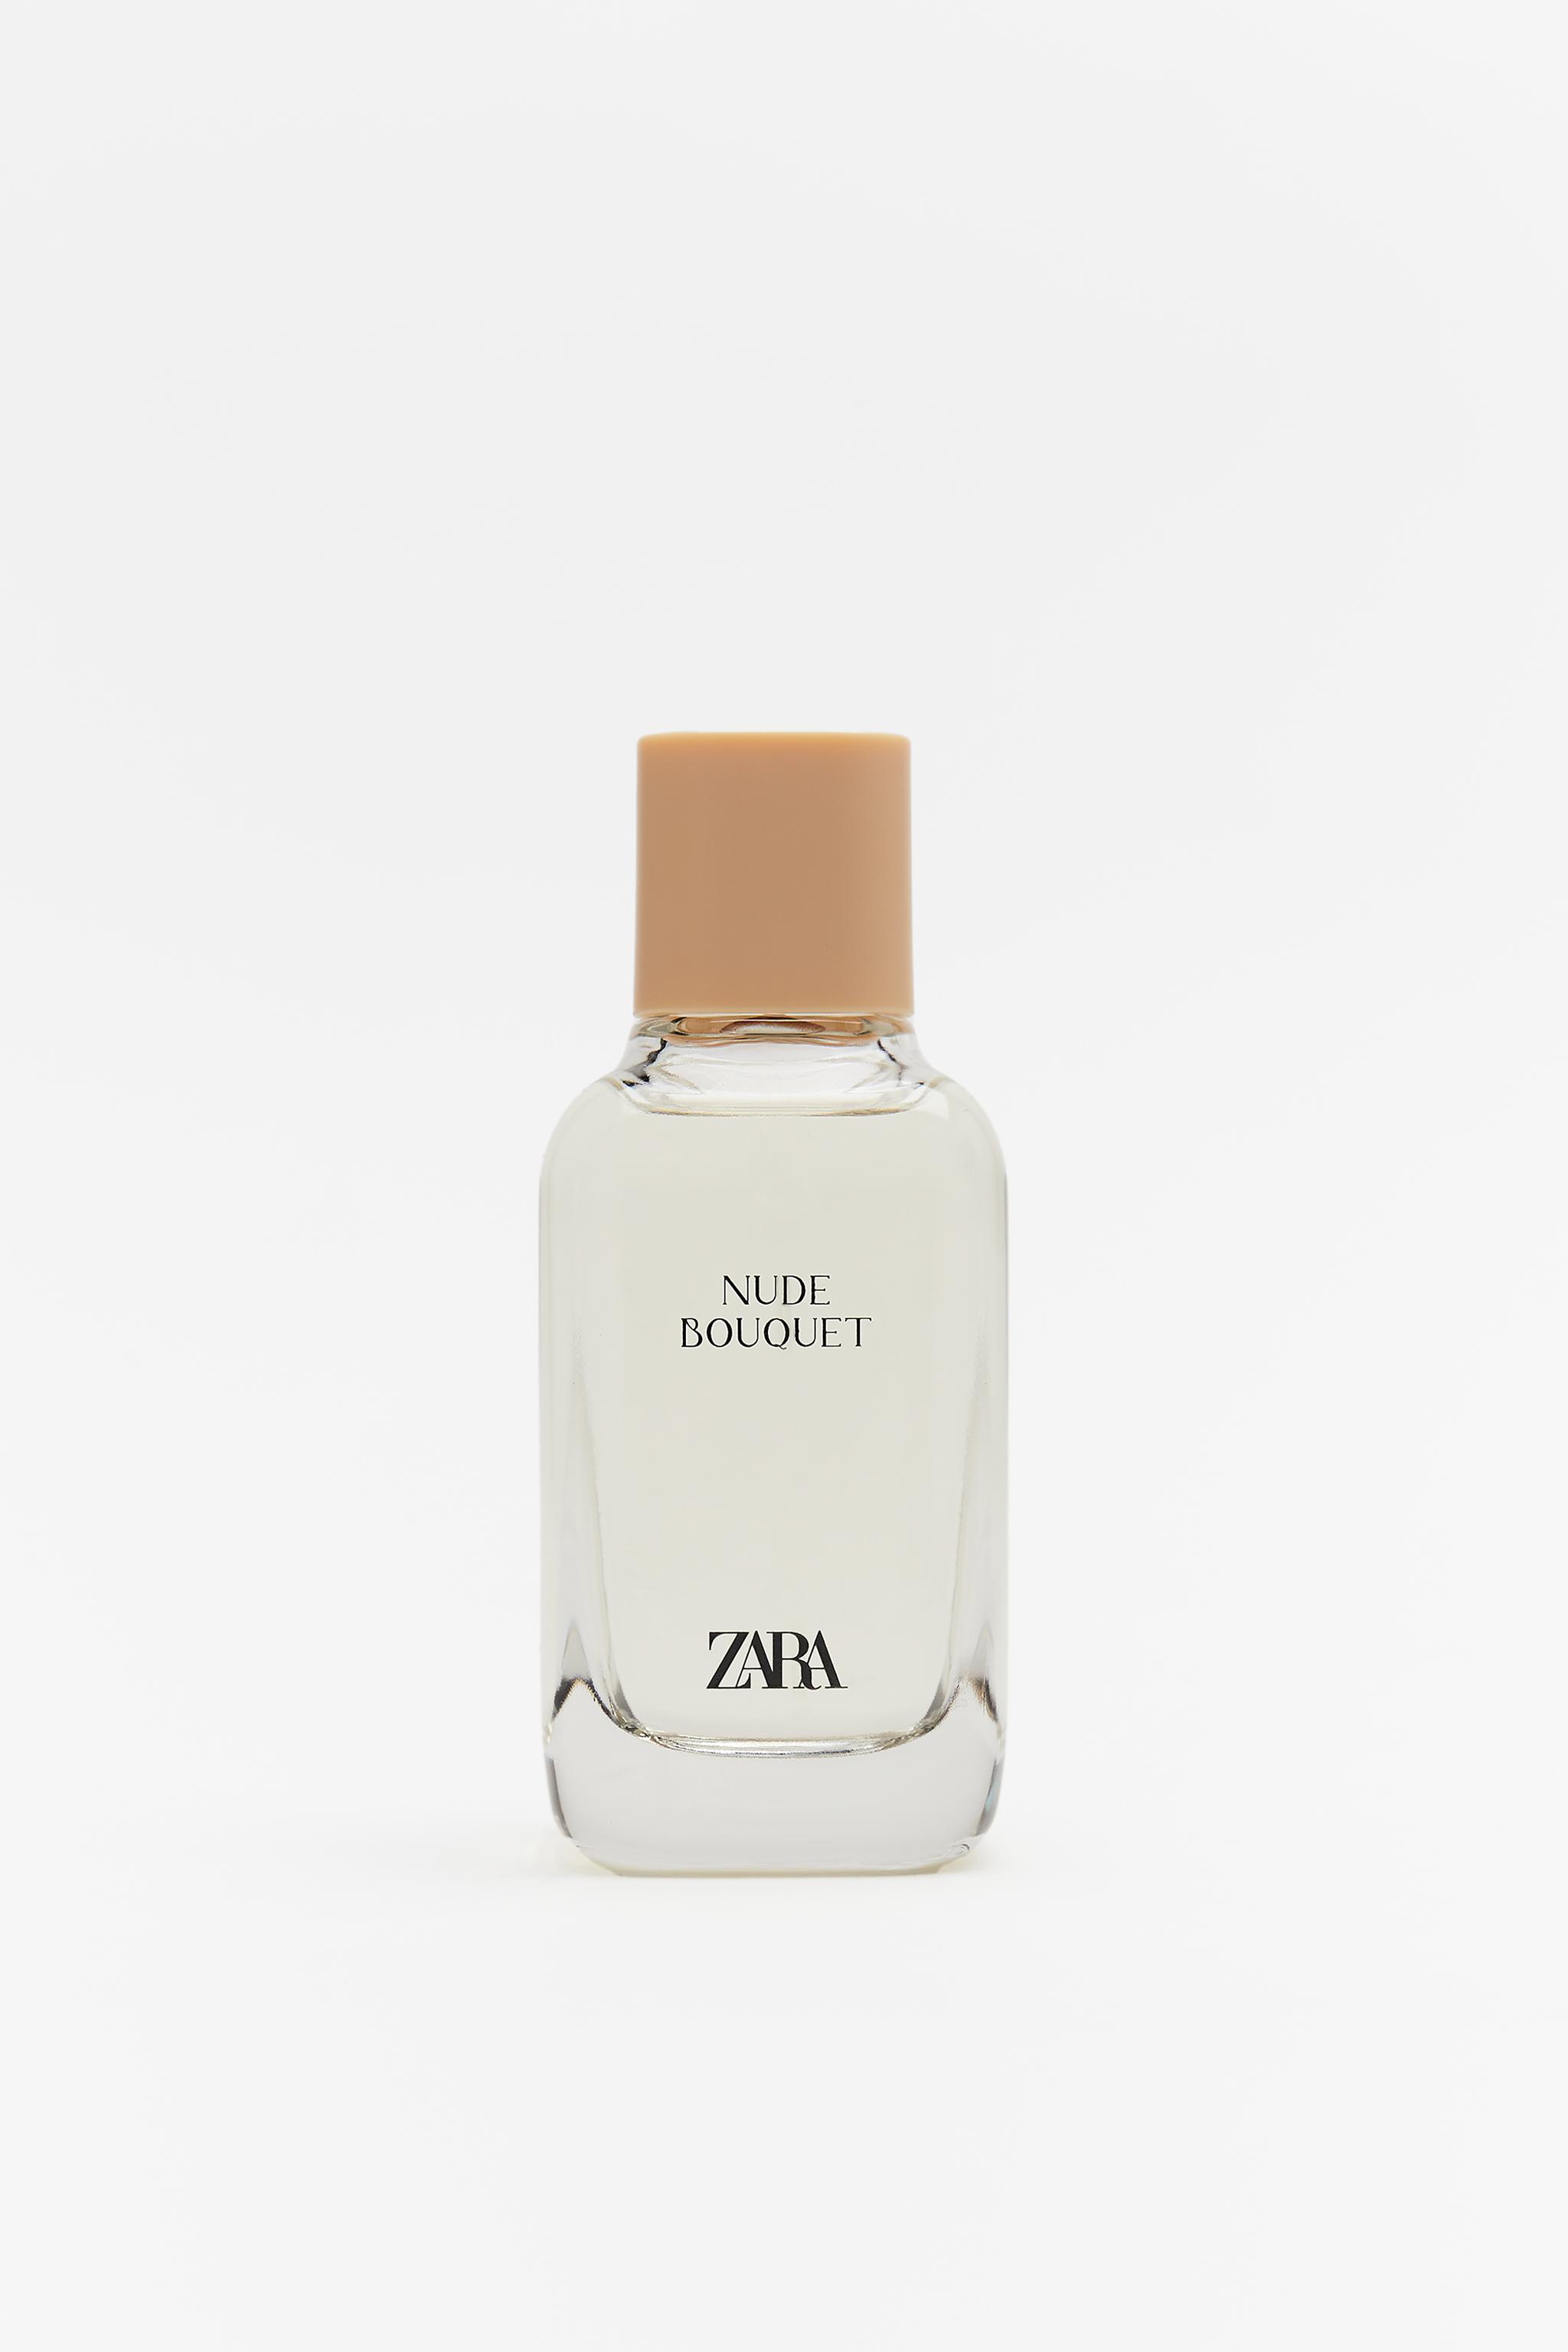 ZARA DEEP GARDEN WOMEN 3.4 oz (100 ml) Eau de Parfum EDP Spray NEW & SEALED